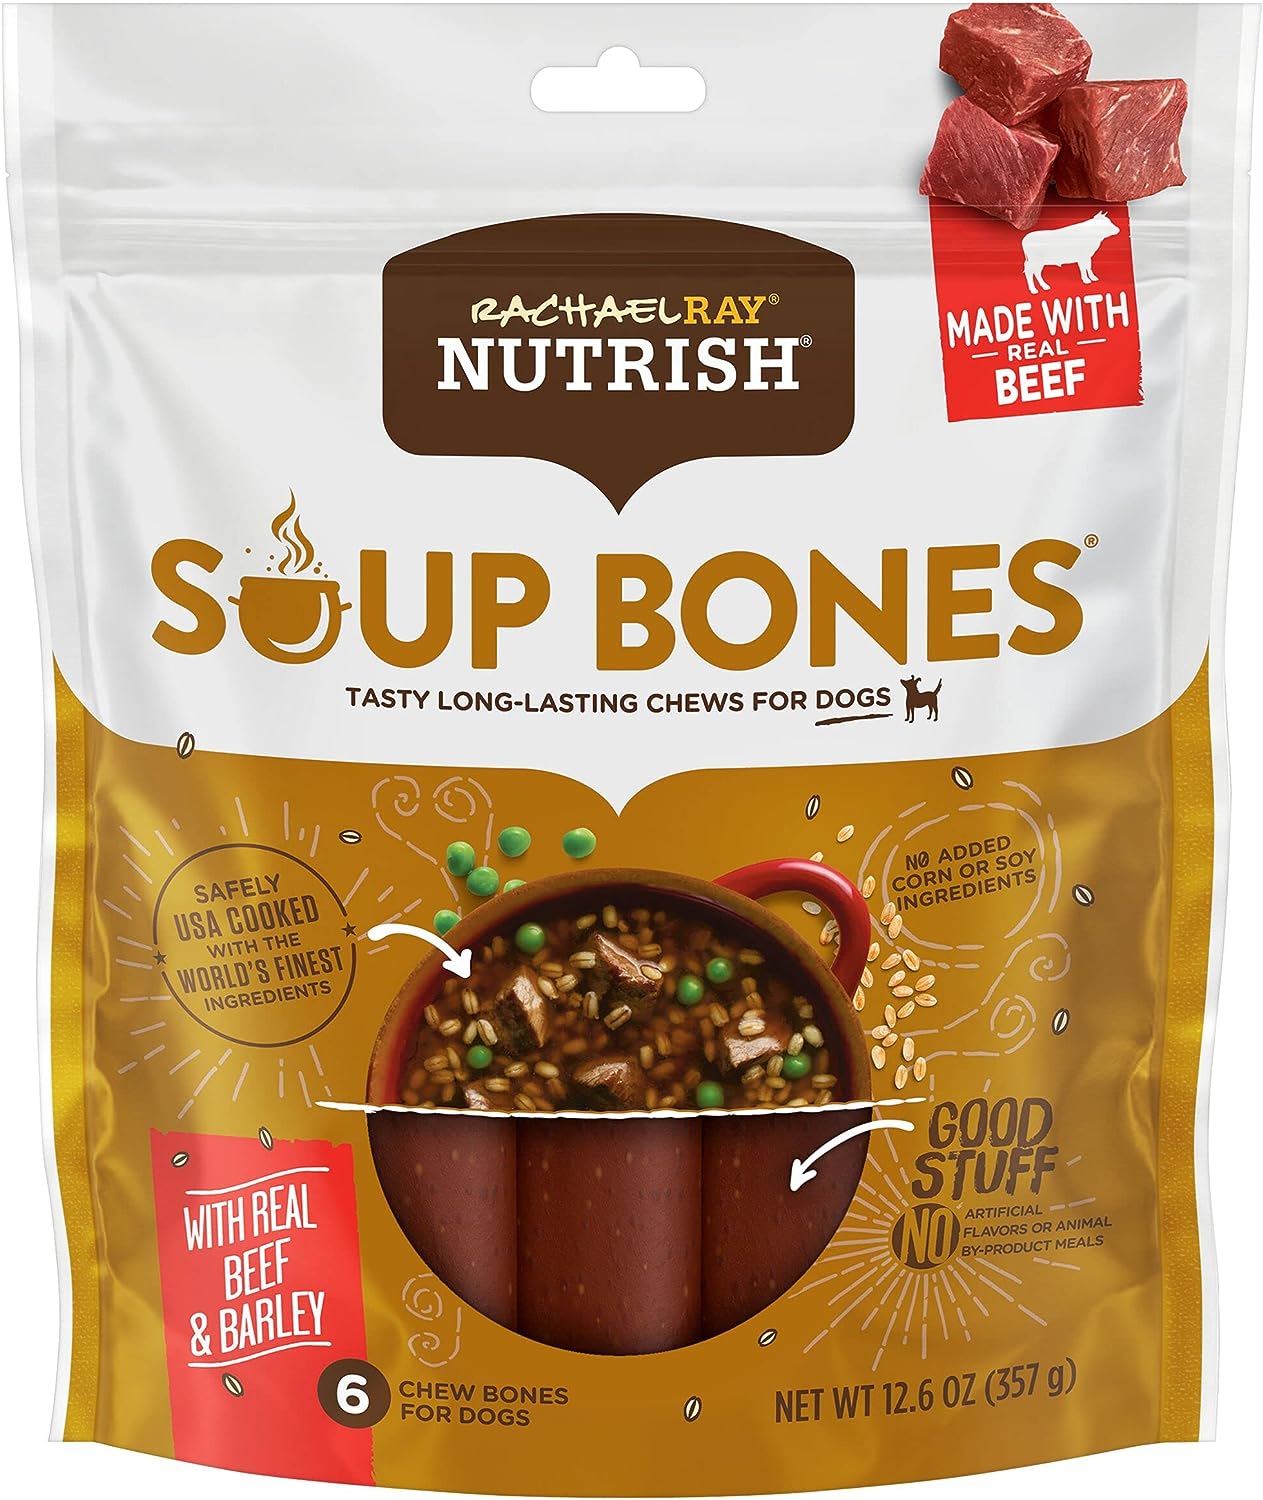 Rachael Ray Nutrish Soup Bones Dog Treats, Beef & Barley Flavor, 6 Bones